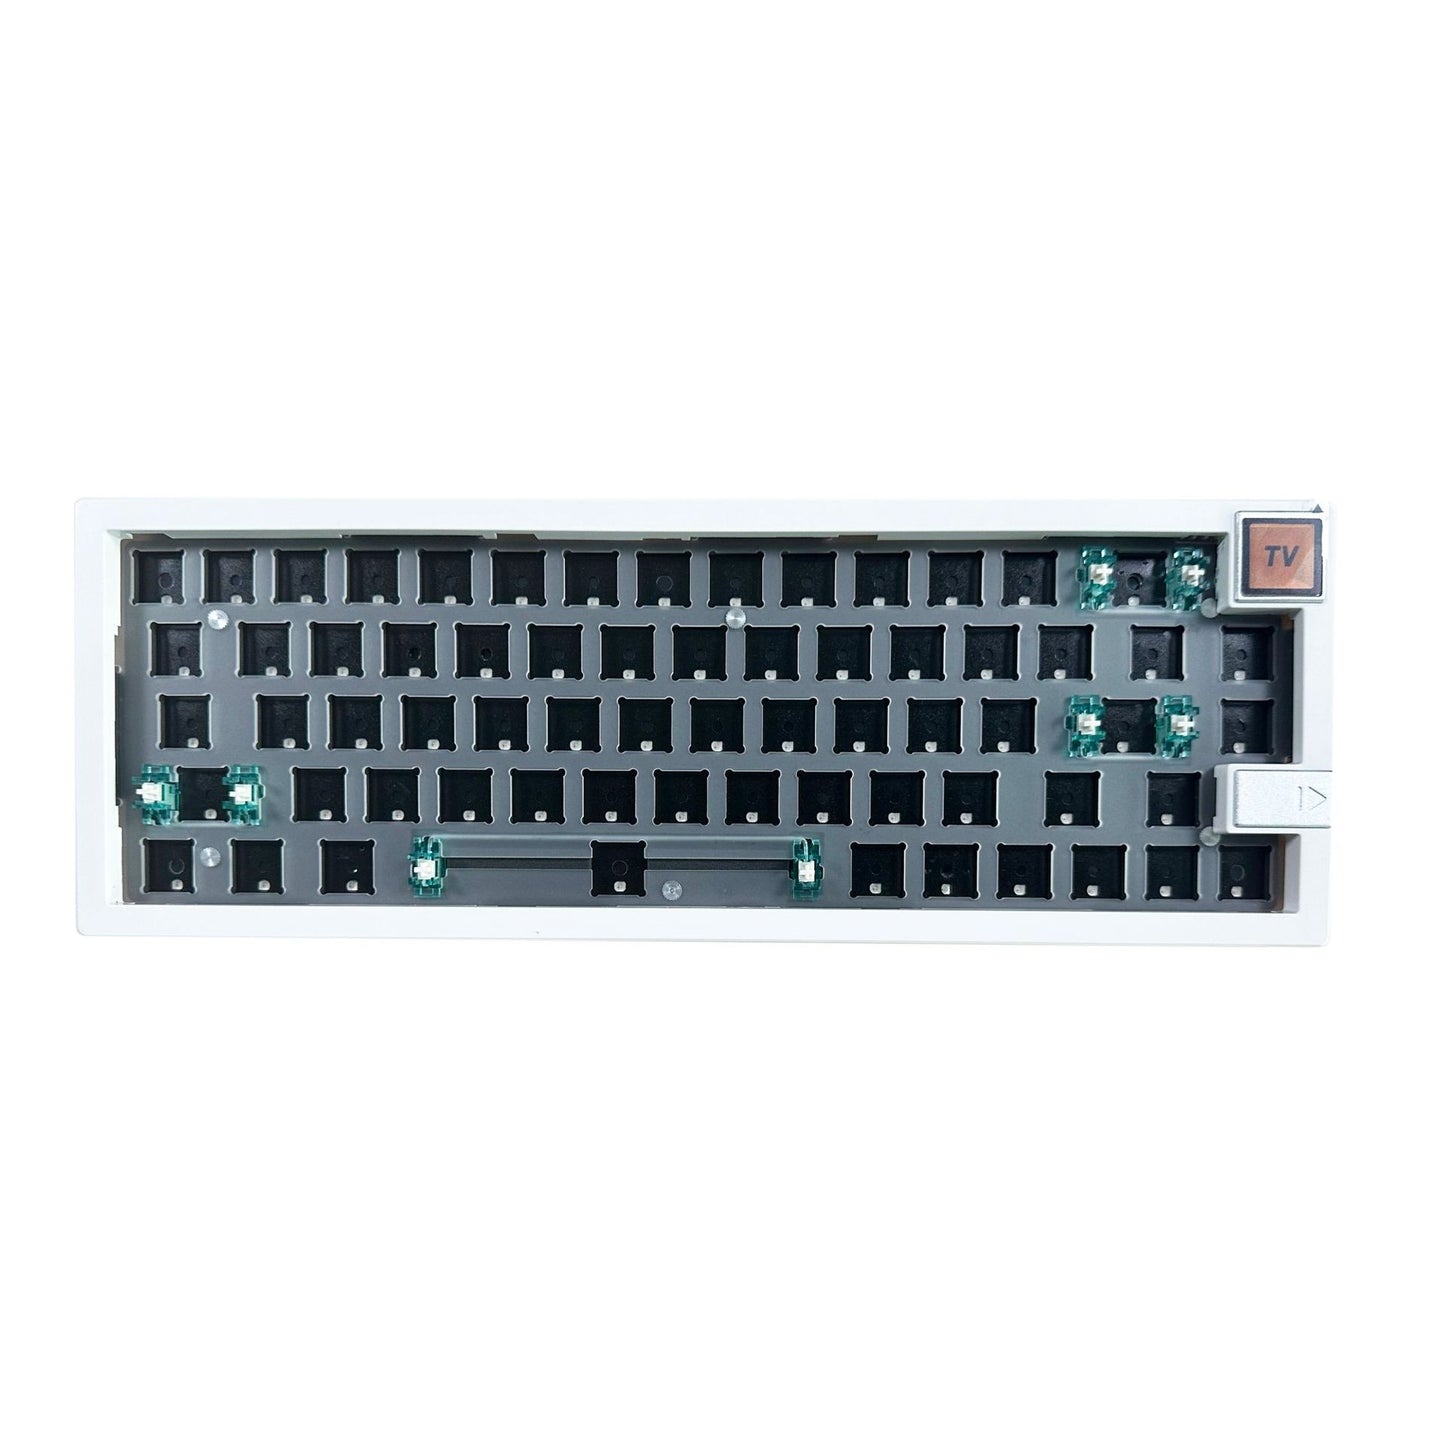 GMK67-S 65% Gasket Mechanical Keyboard with LED Screen